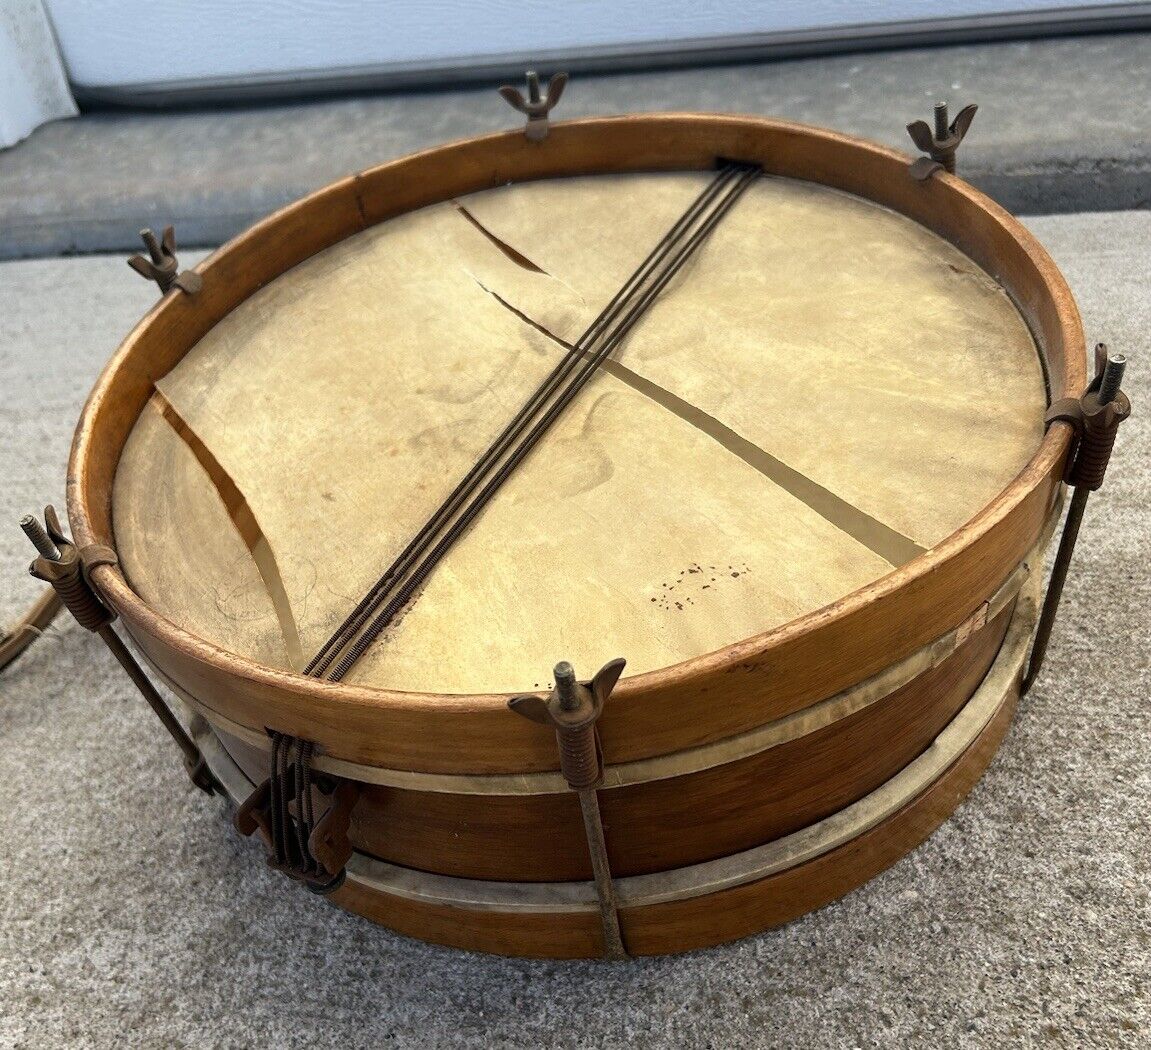 Antique Wooden Snare Drum